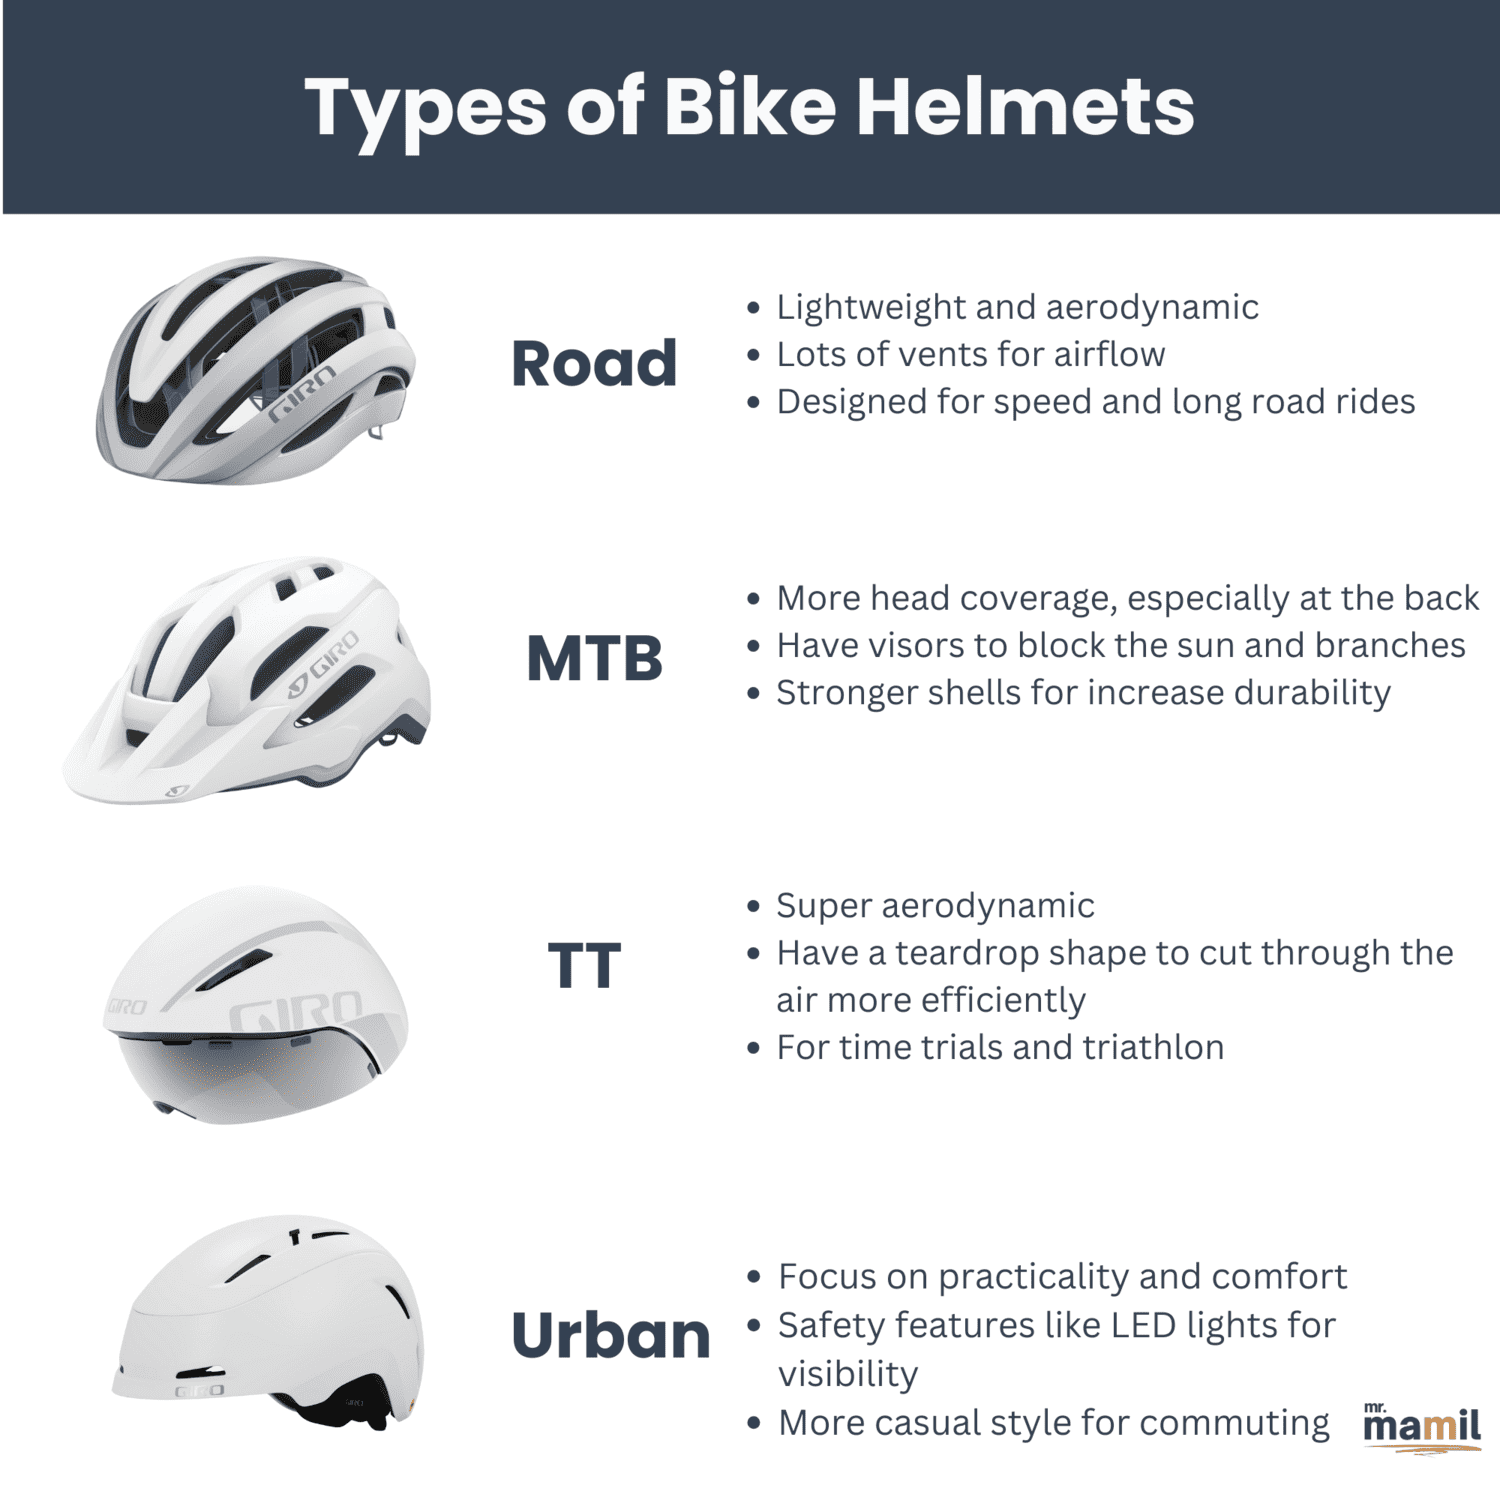 Types of Bicycle Helmets